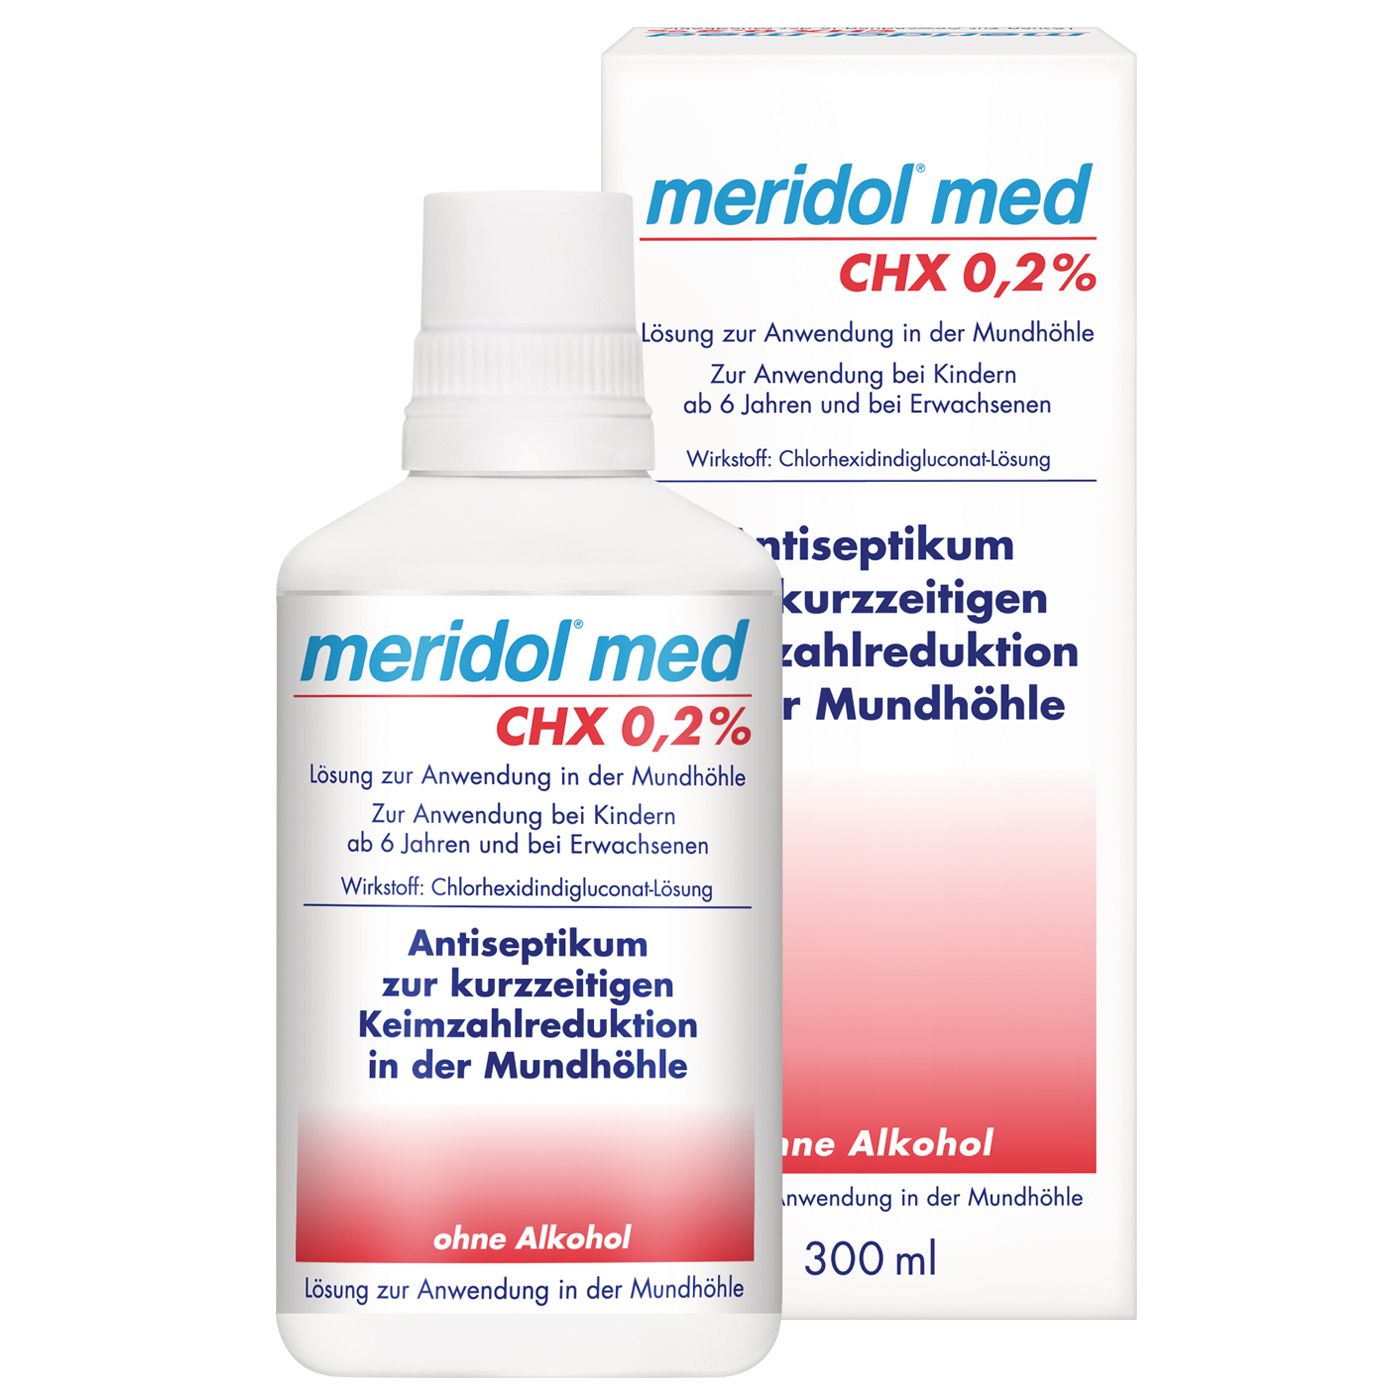 meridol® med CHX 0,2%